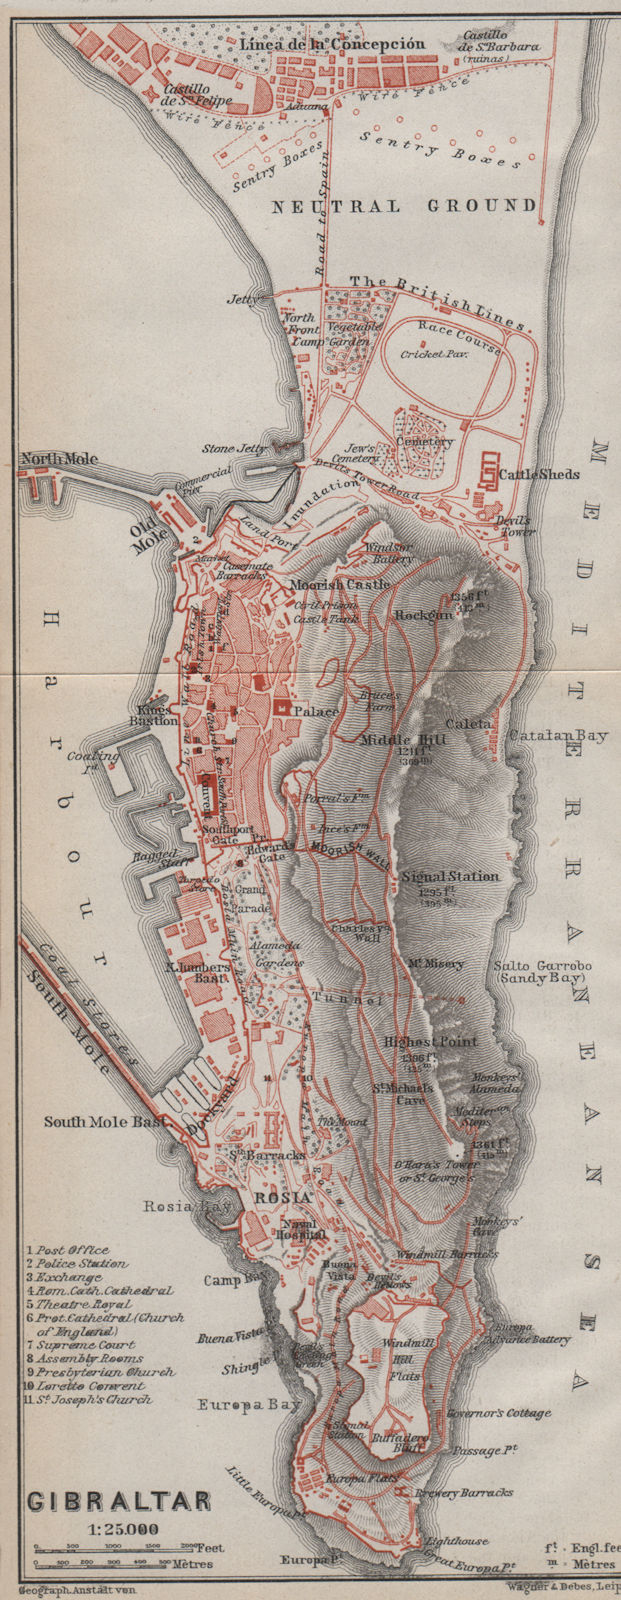 GIBRALTAR antique town city plan. Gibraltar. BAEDEKER 1911 old map